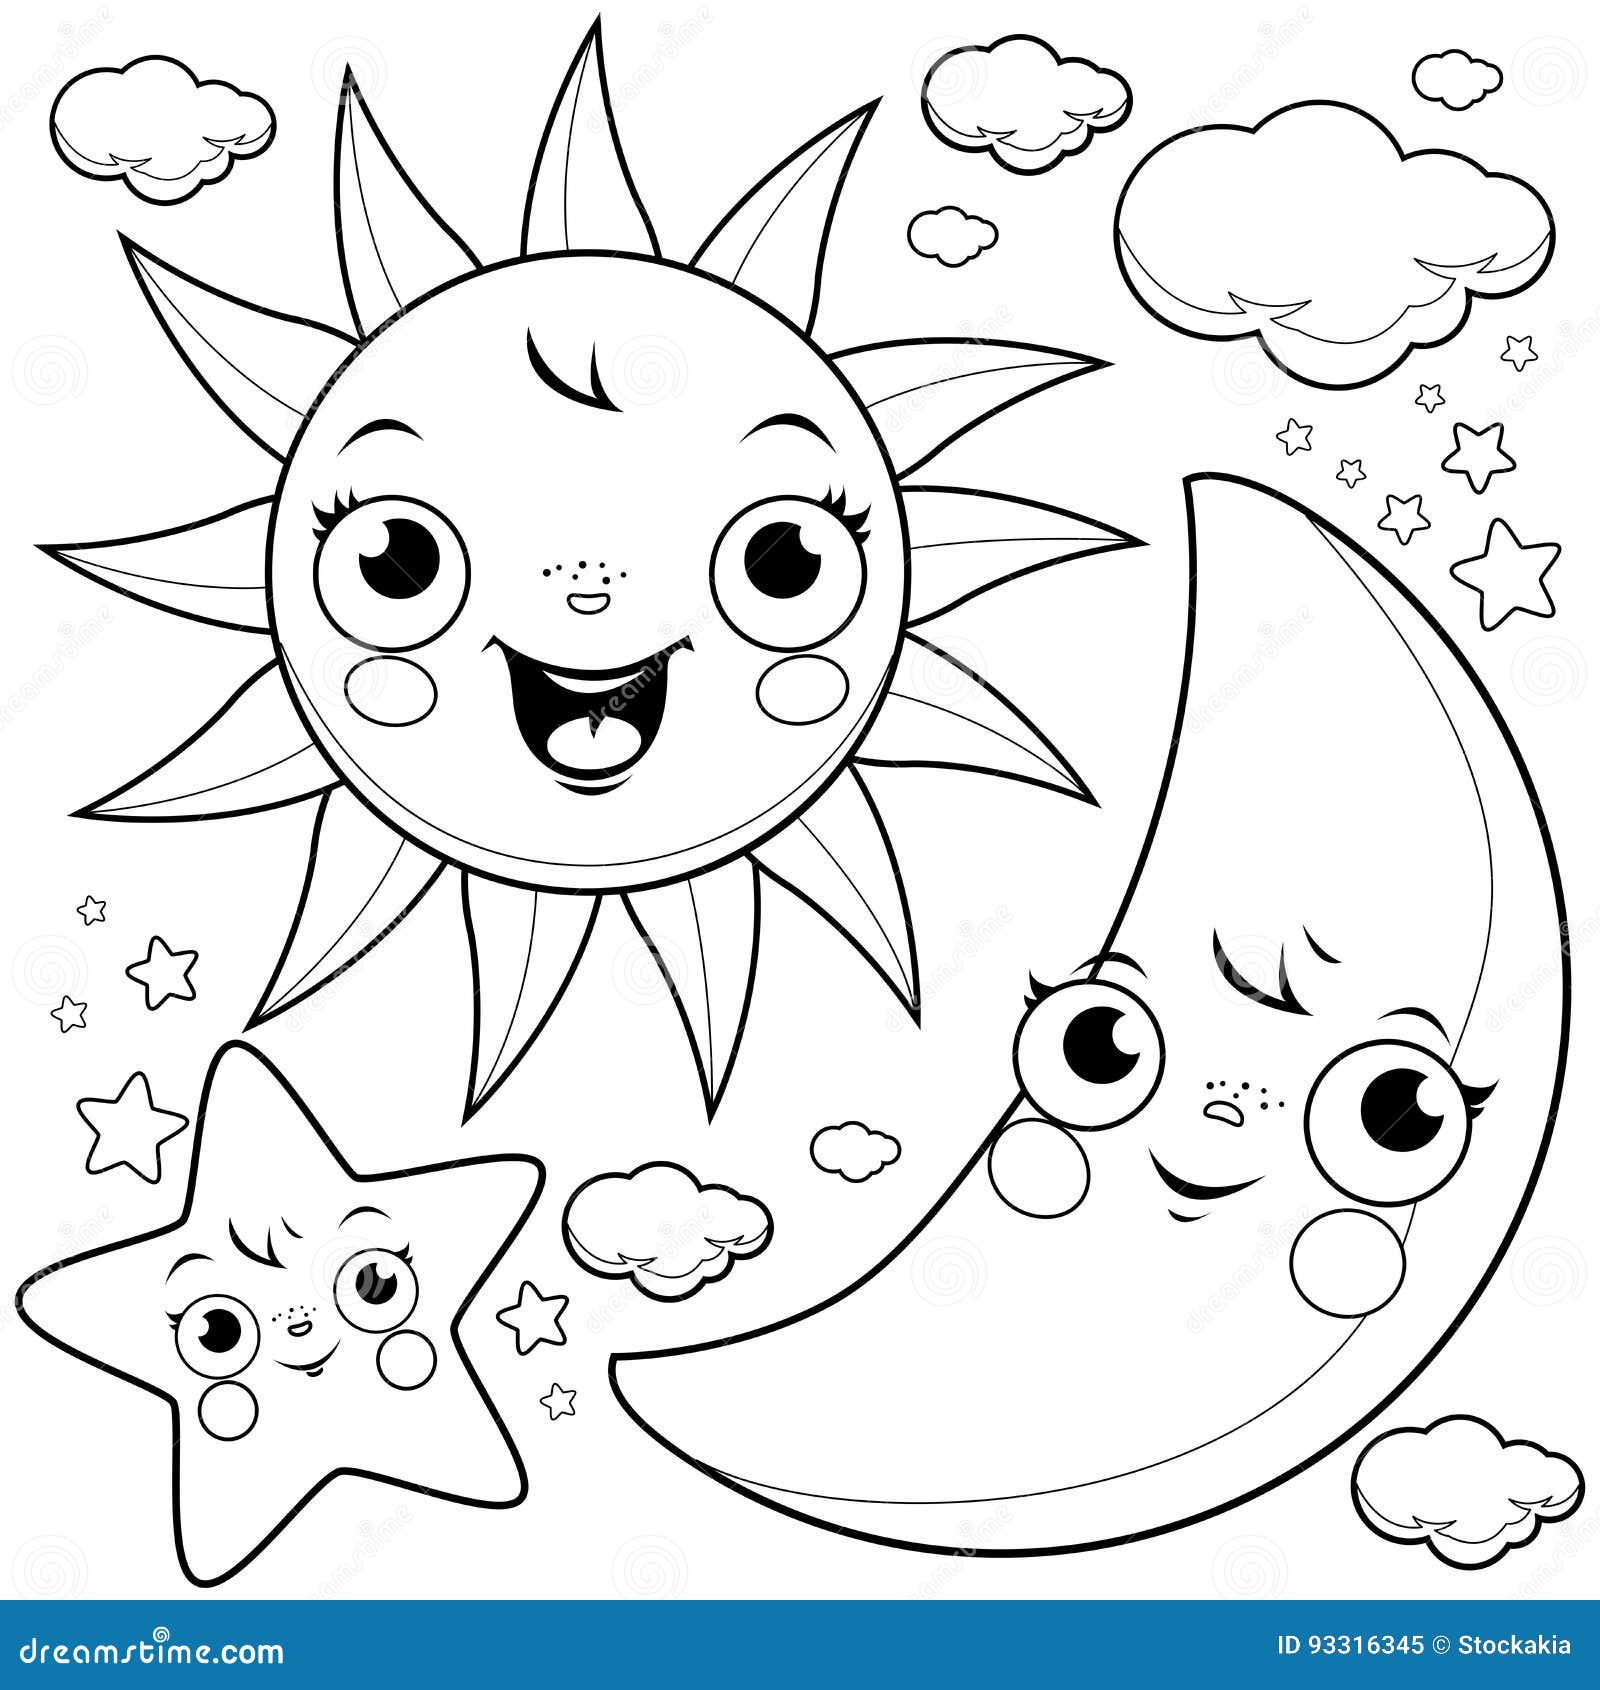 Sun coloring stock illustrations â sun coloring stock illustrations vectors clipart